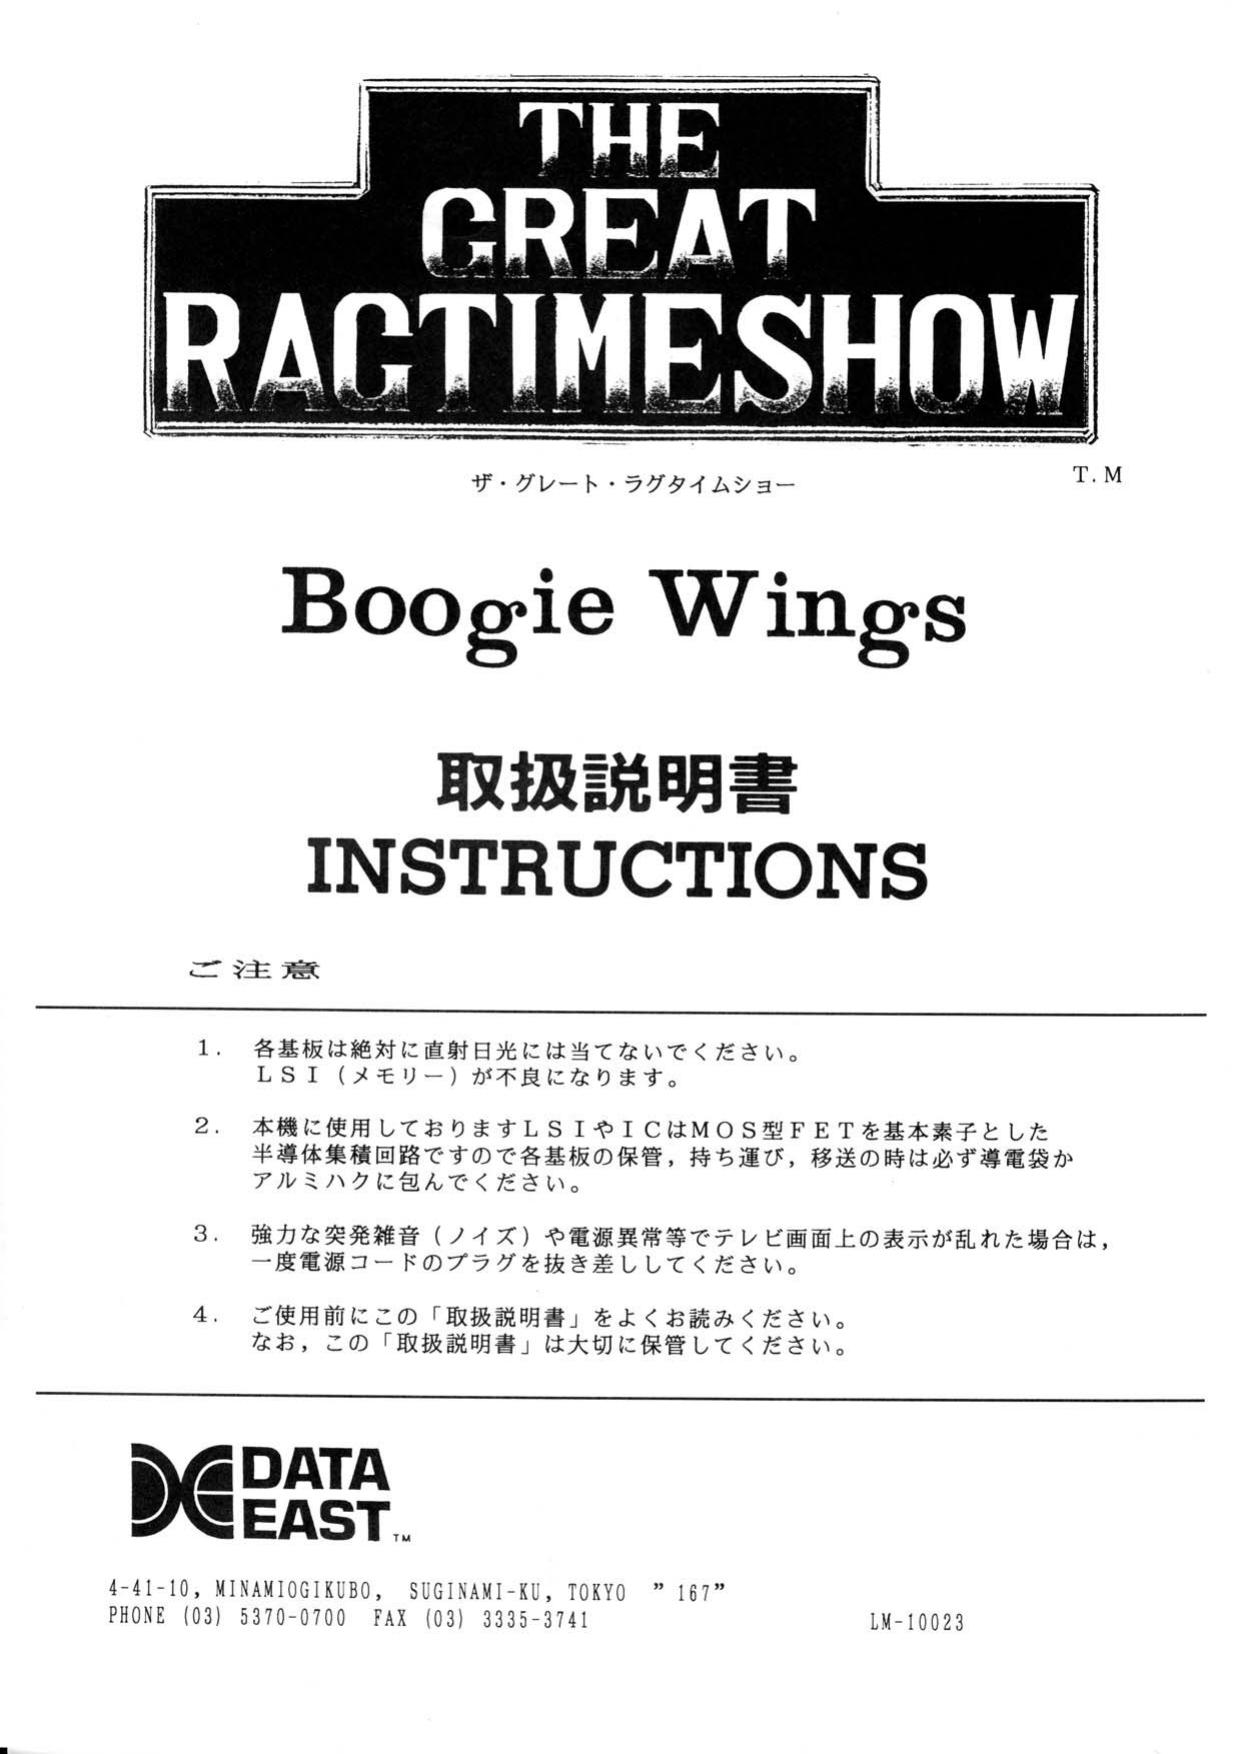 boogie_wings.qxp